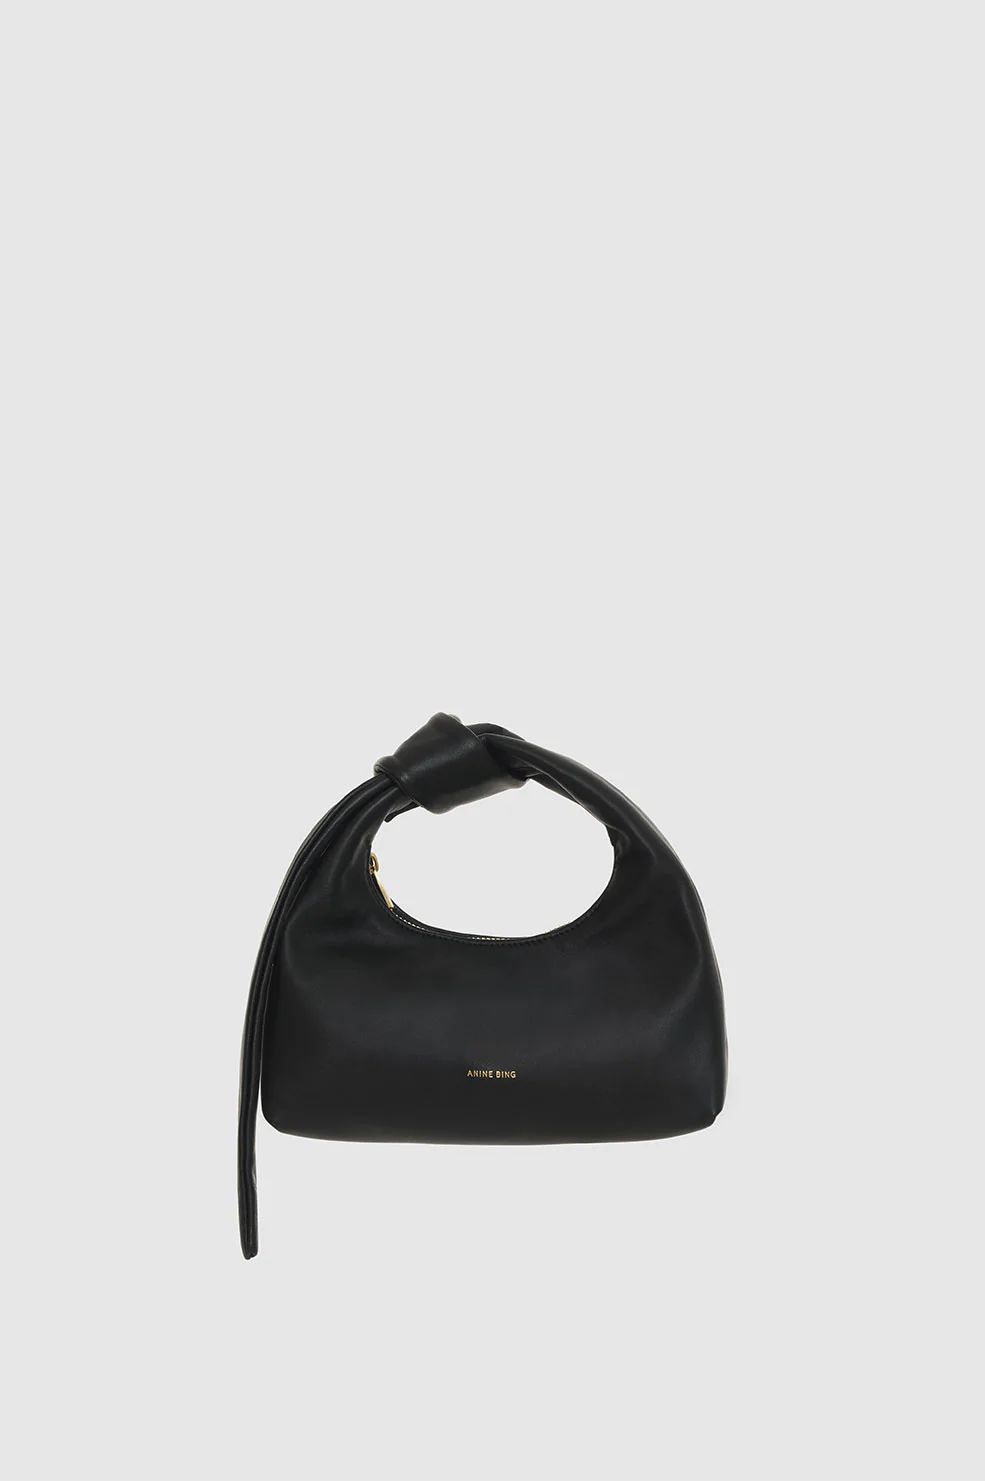 ANINE BING Mini Grace Bag in Black | Anine Bing